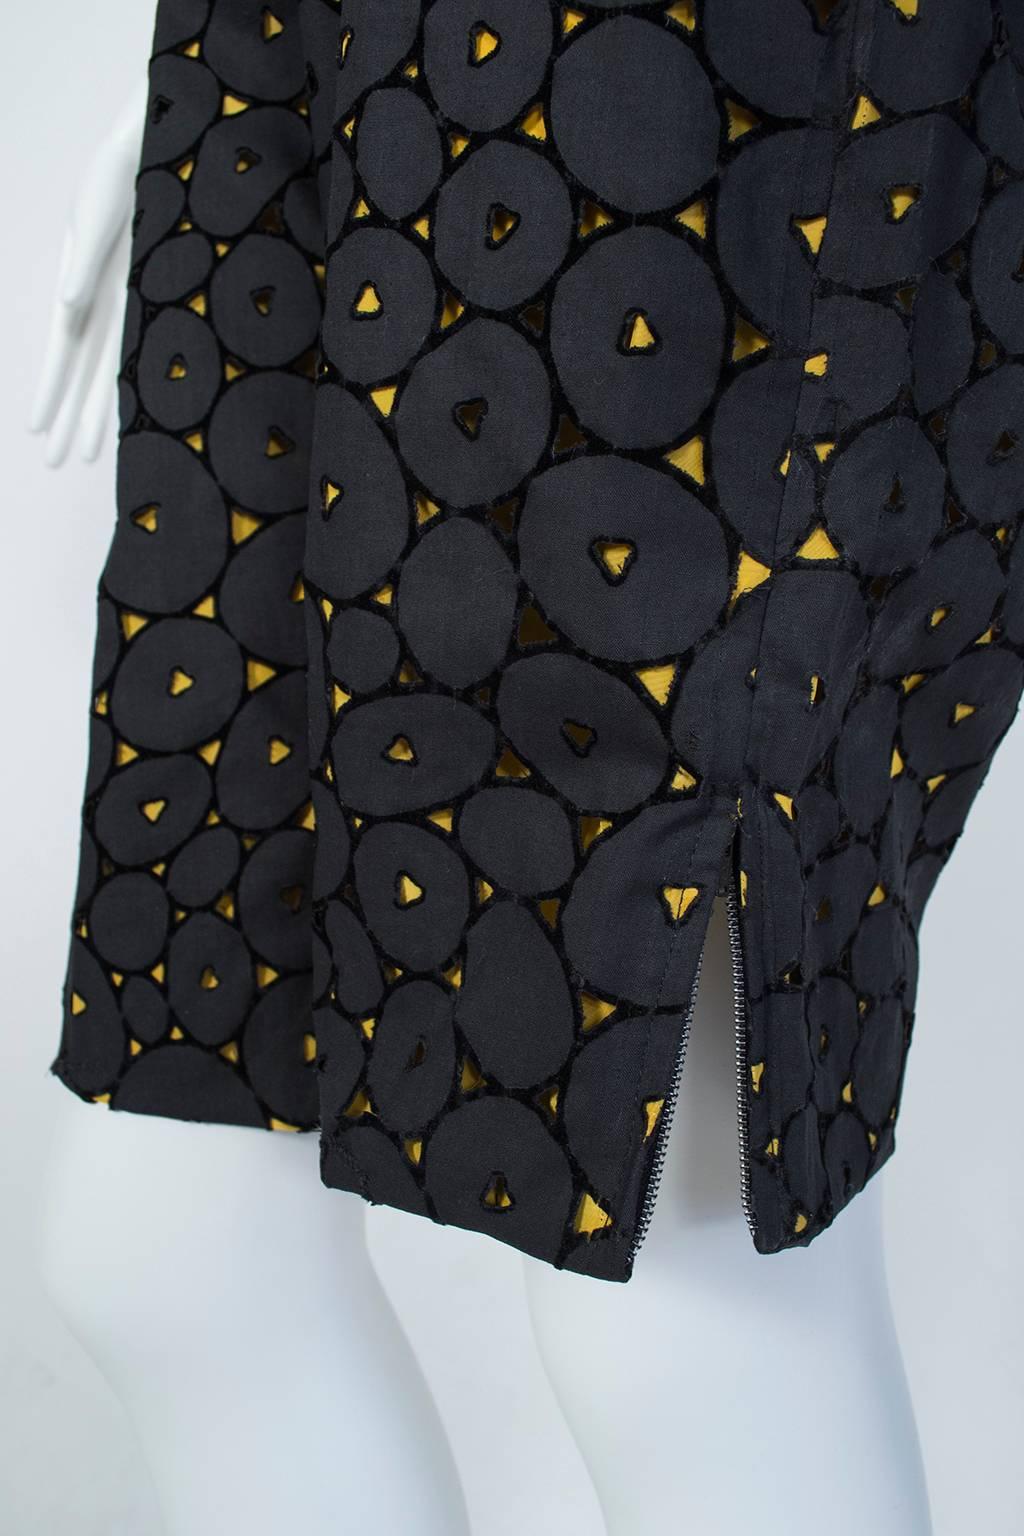 Black and Gold Eyelet Shorts Romper with Sheer Hostess Overskirt - Medium, 1950s 5